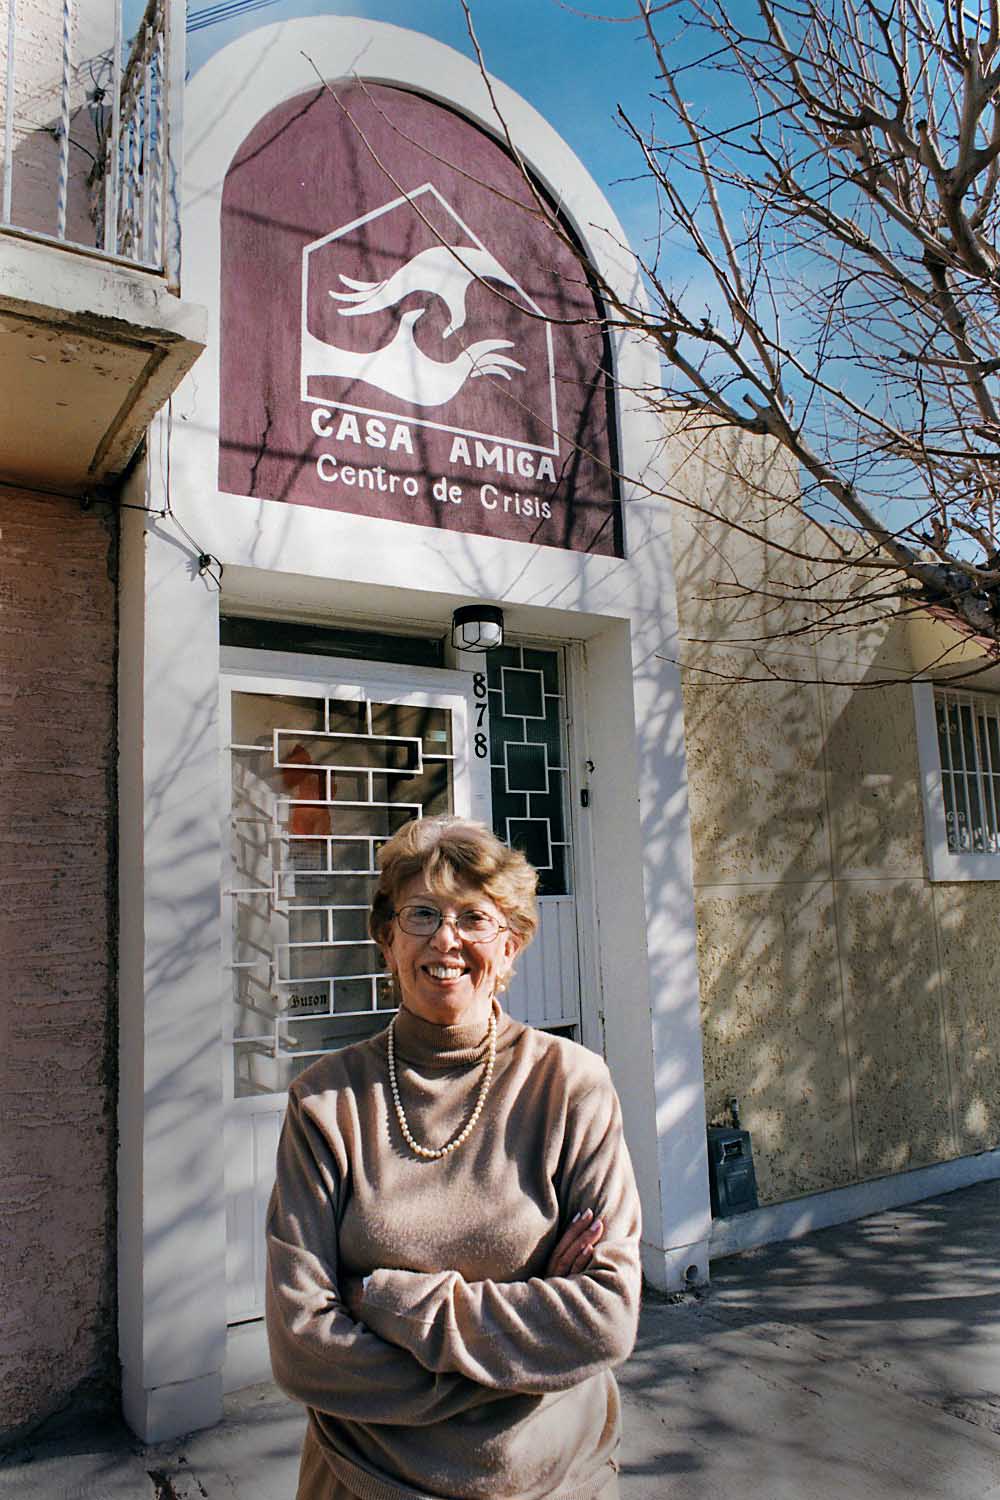 Esther Chave Cano at Casa Amiga